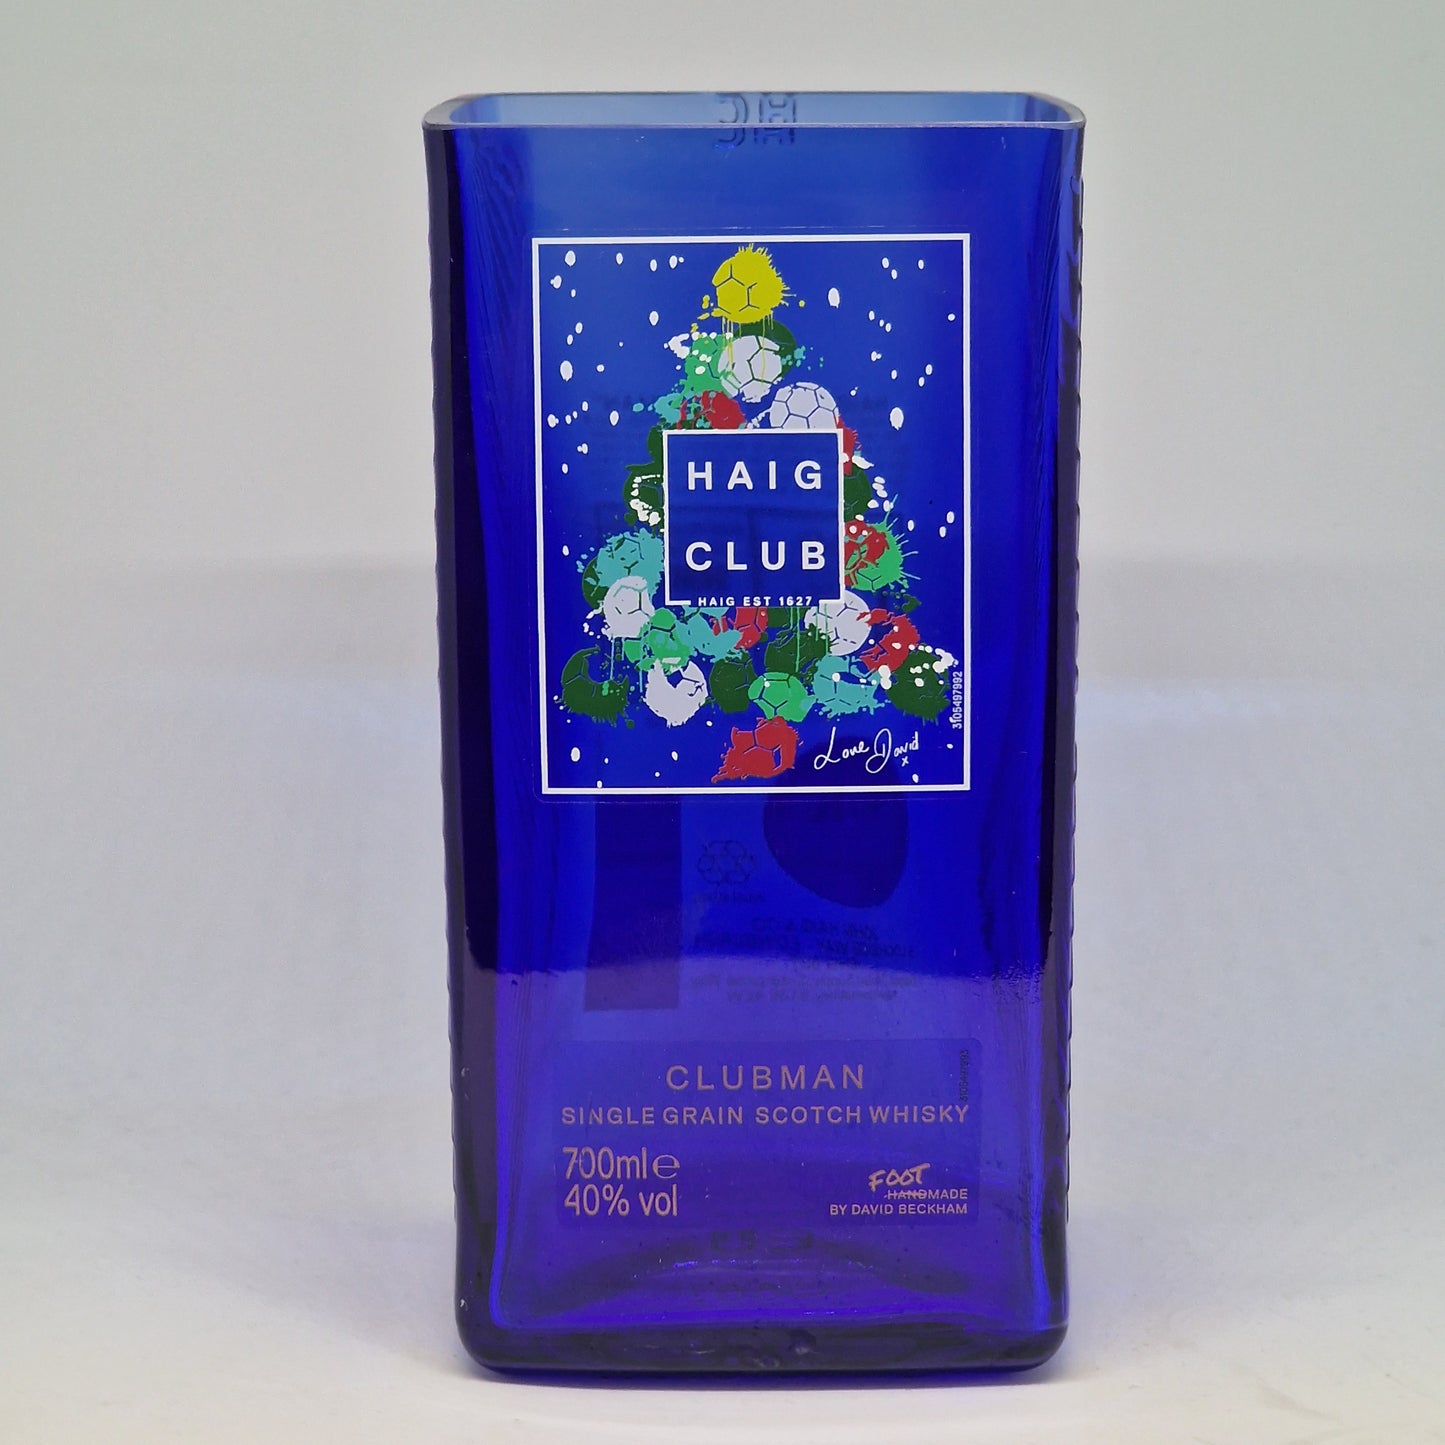 Haig Club Christmas Whisky Bottle Candle